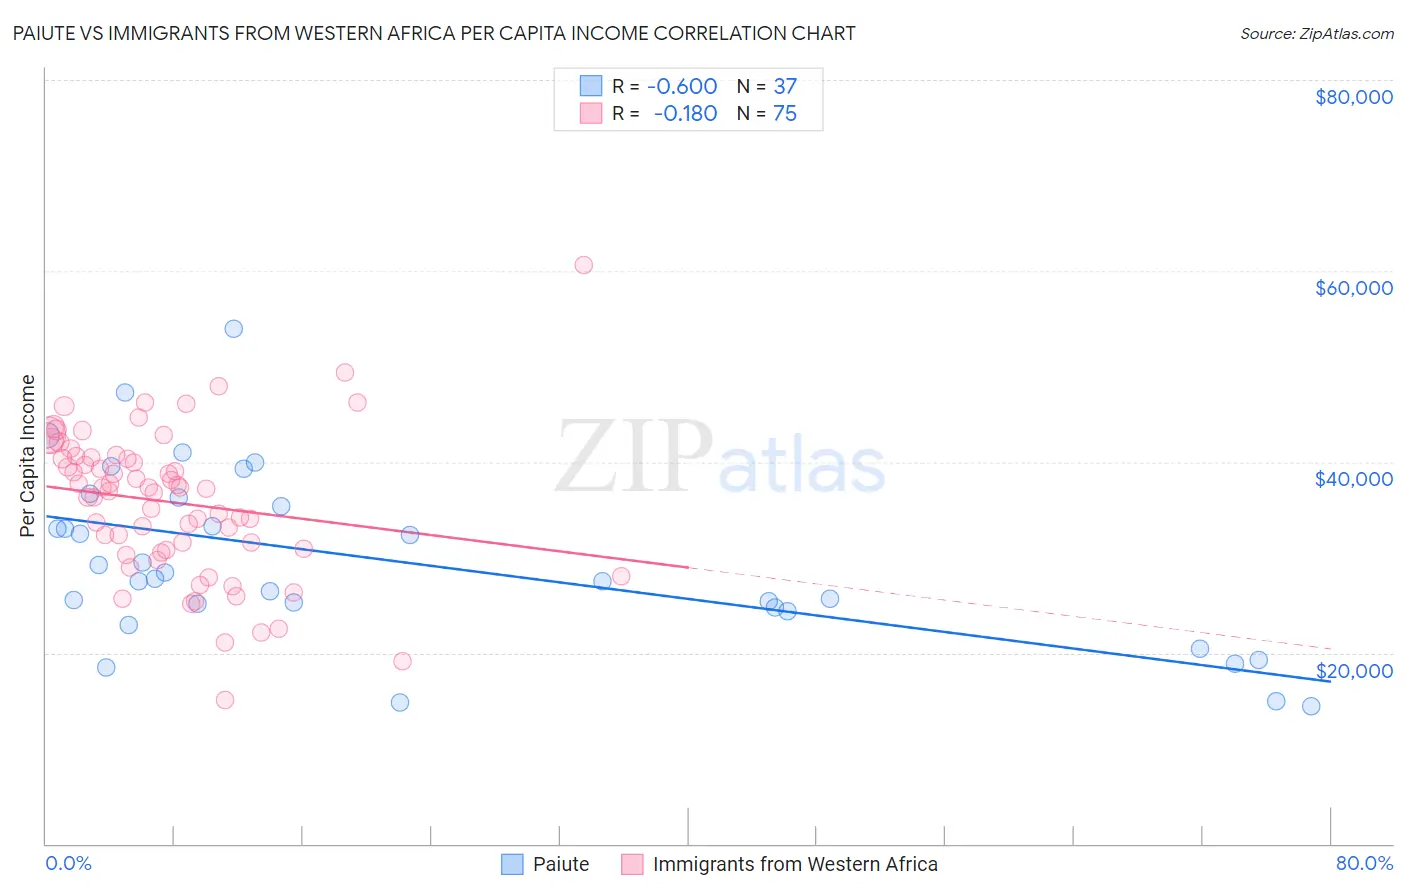 Paiute vs Immigrants from Western Africa Per Capita Income